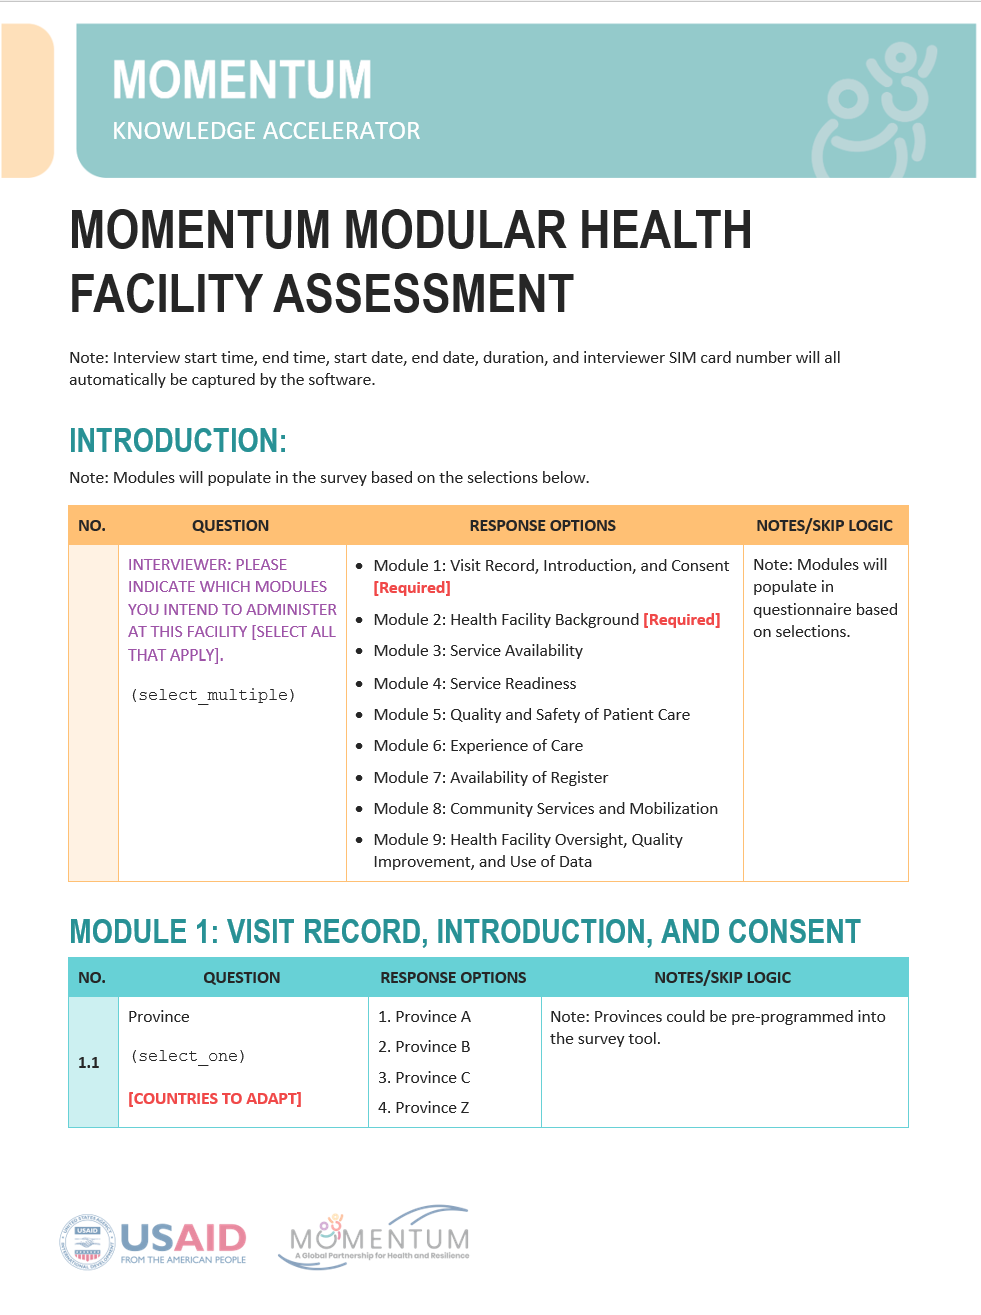 MOMENTUM Modular Health Facility Assessment